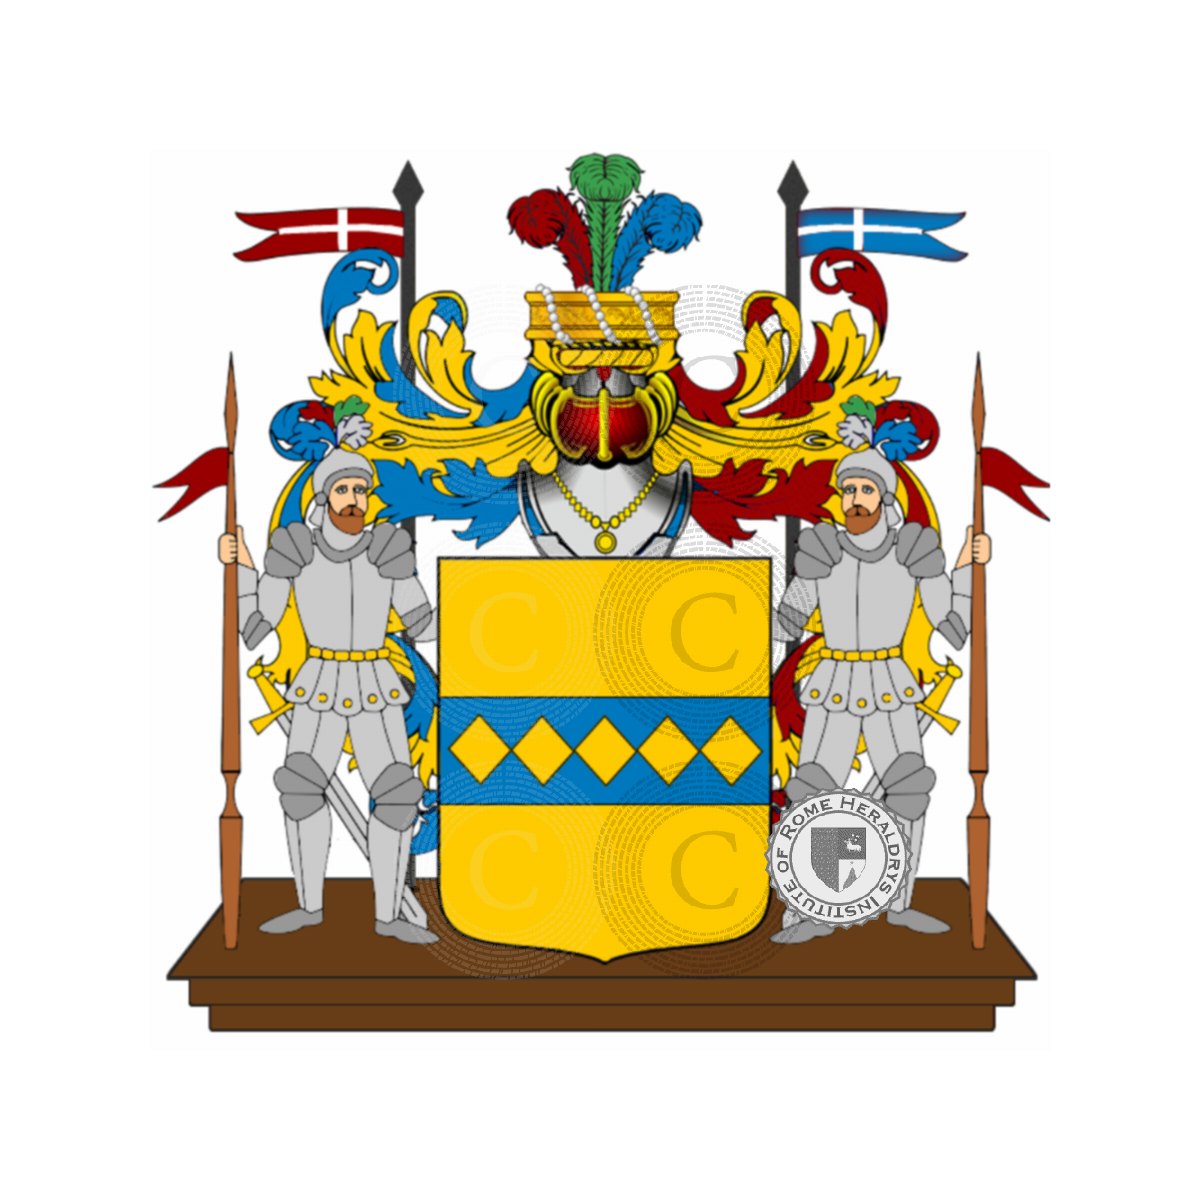 Wappen der Familie Marenero